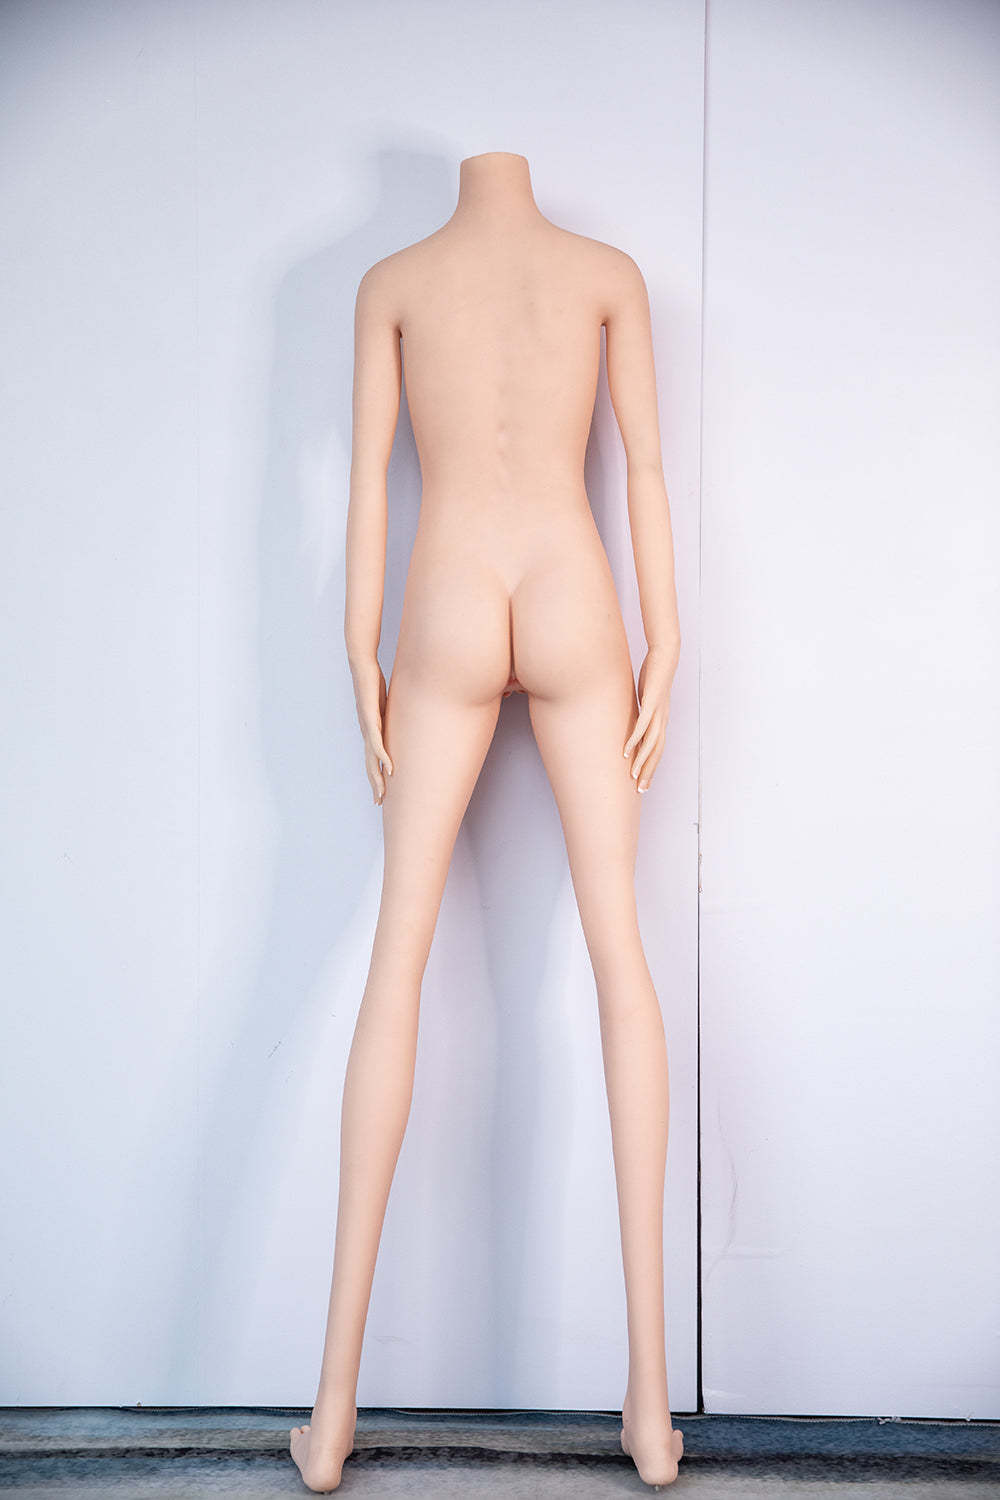 Jolie-5 ft 6 in / 168 cm Affordable Sex Doll